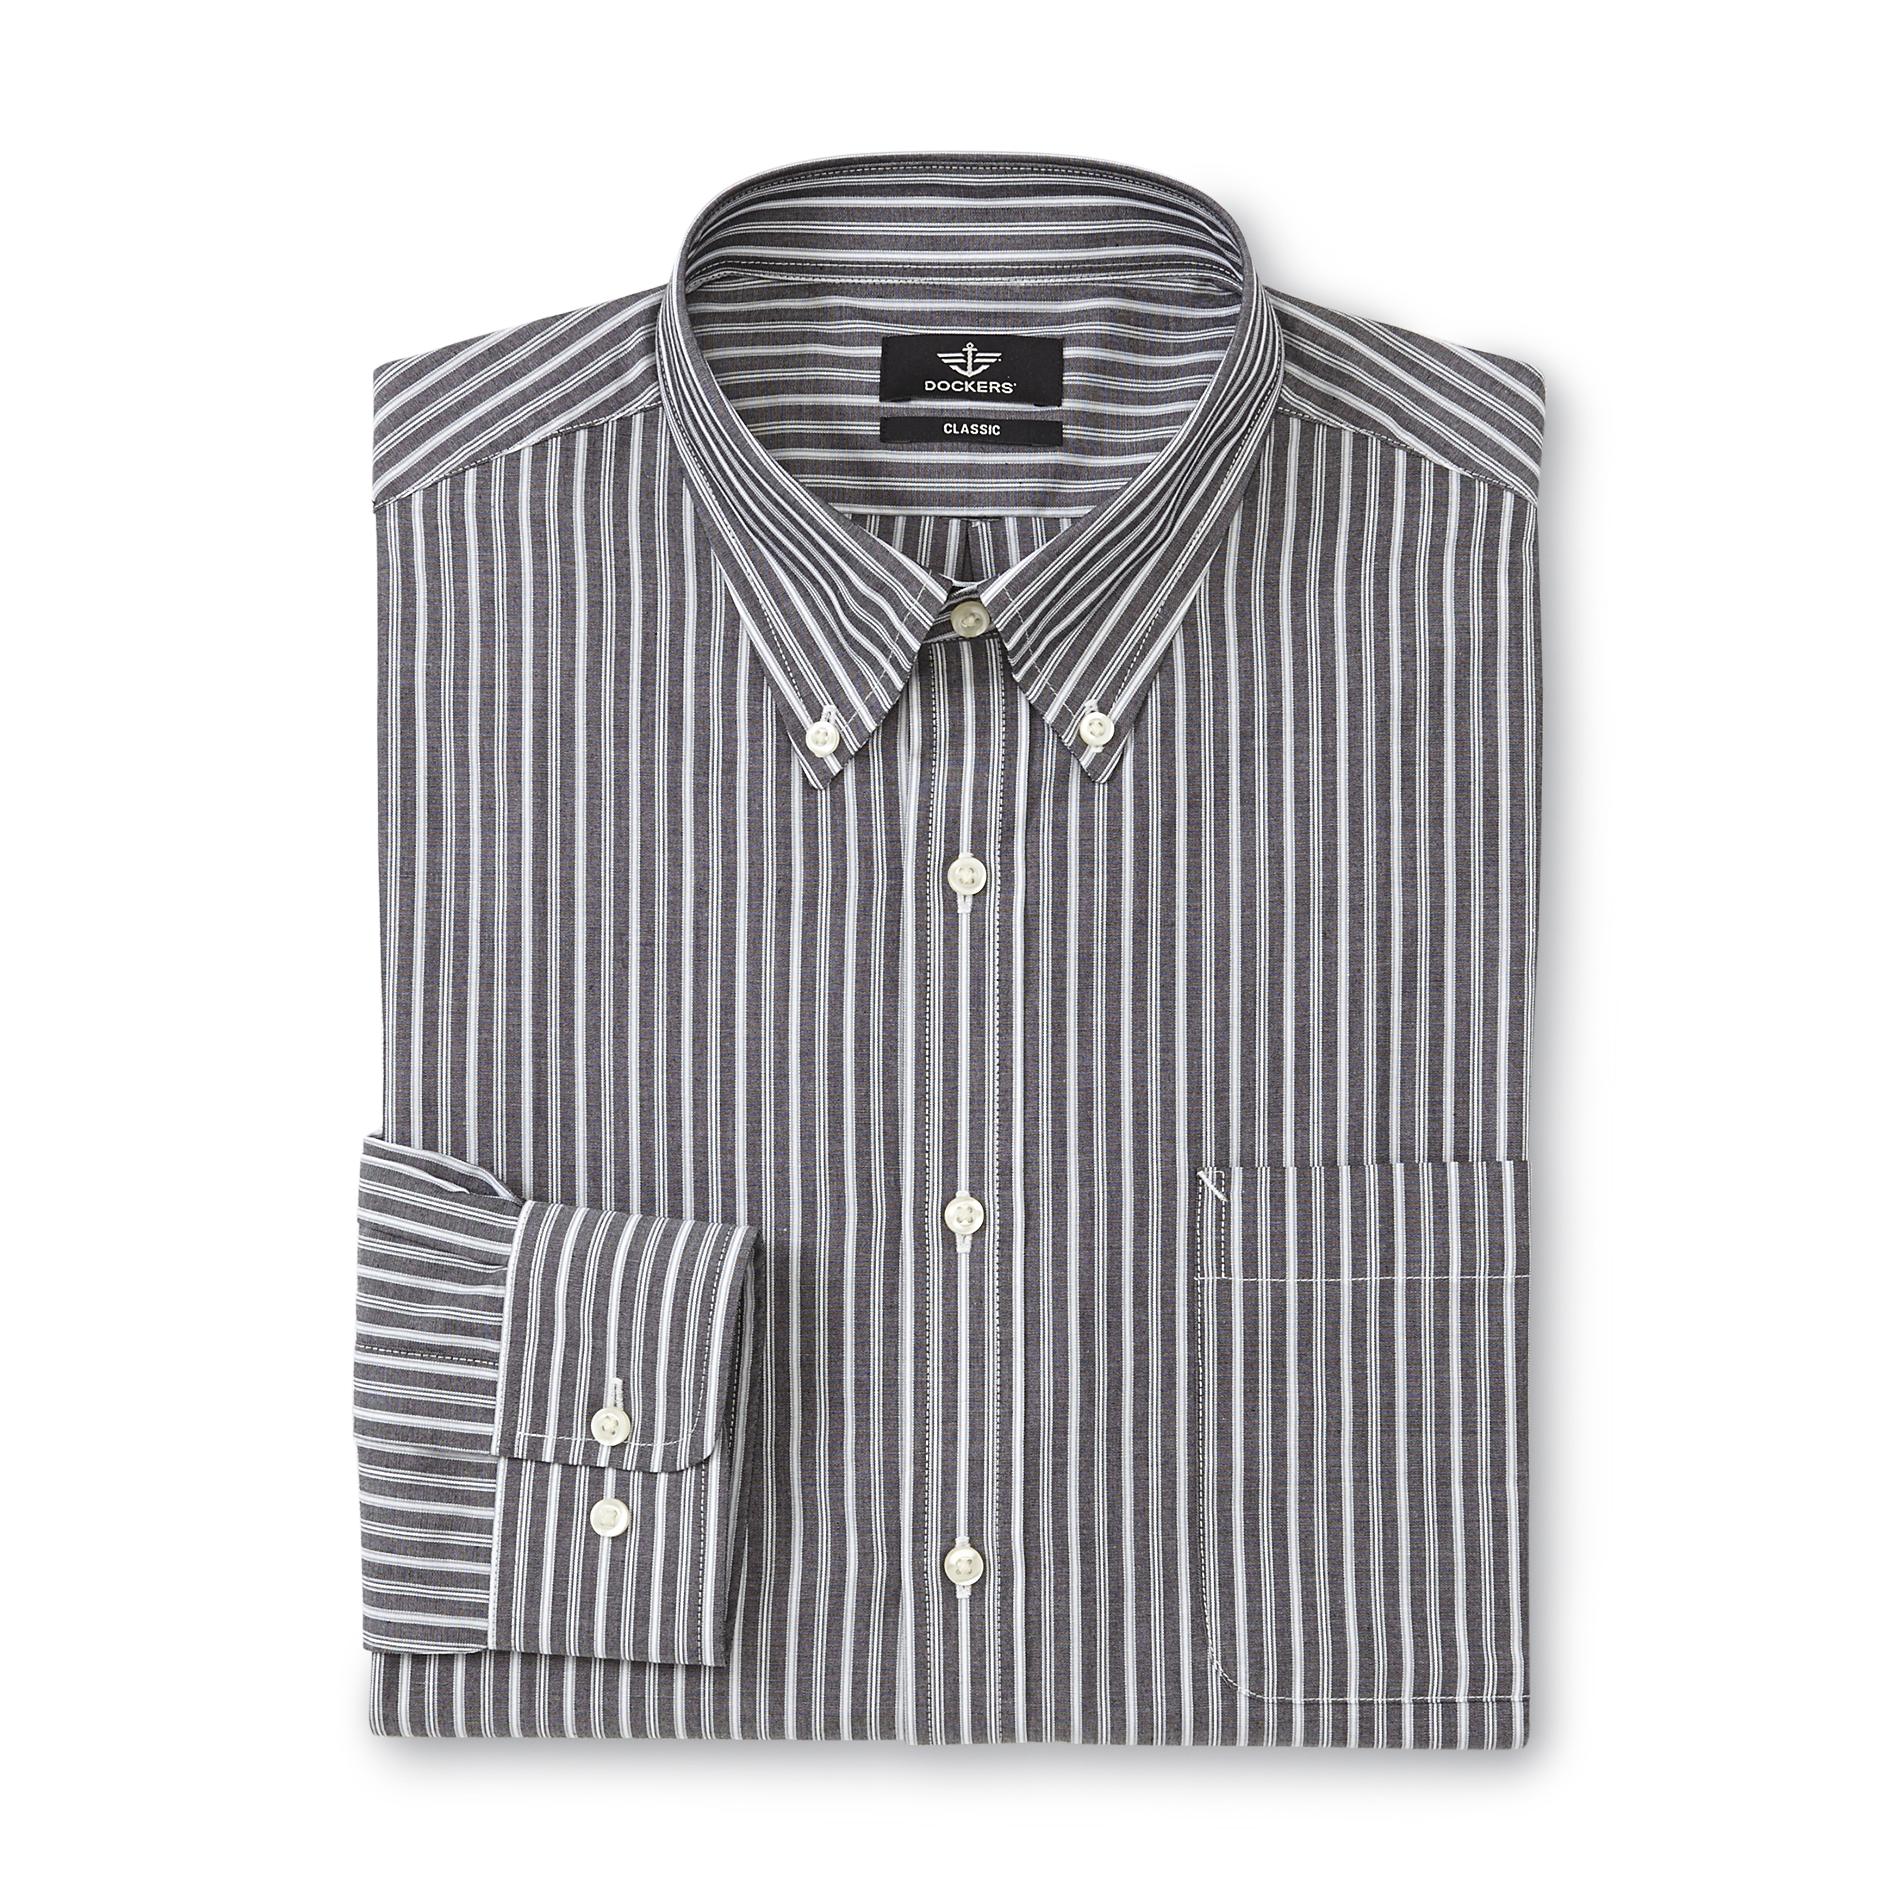 Dockers Men's Classic Fit Dress Shirt - Striped